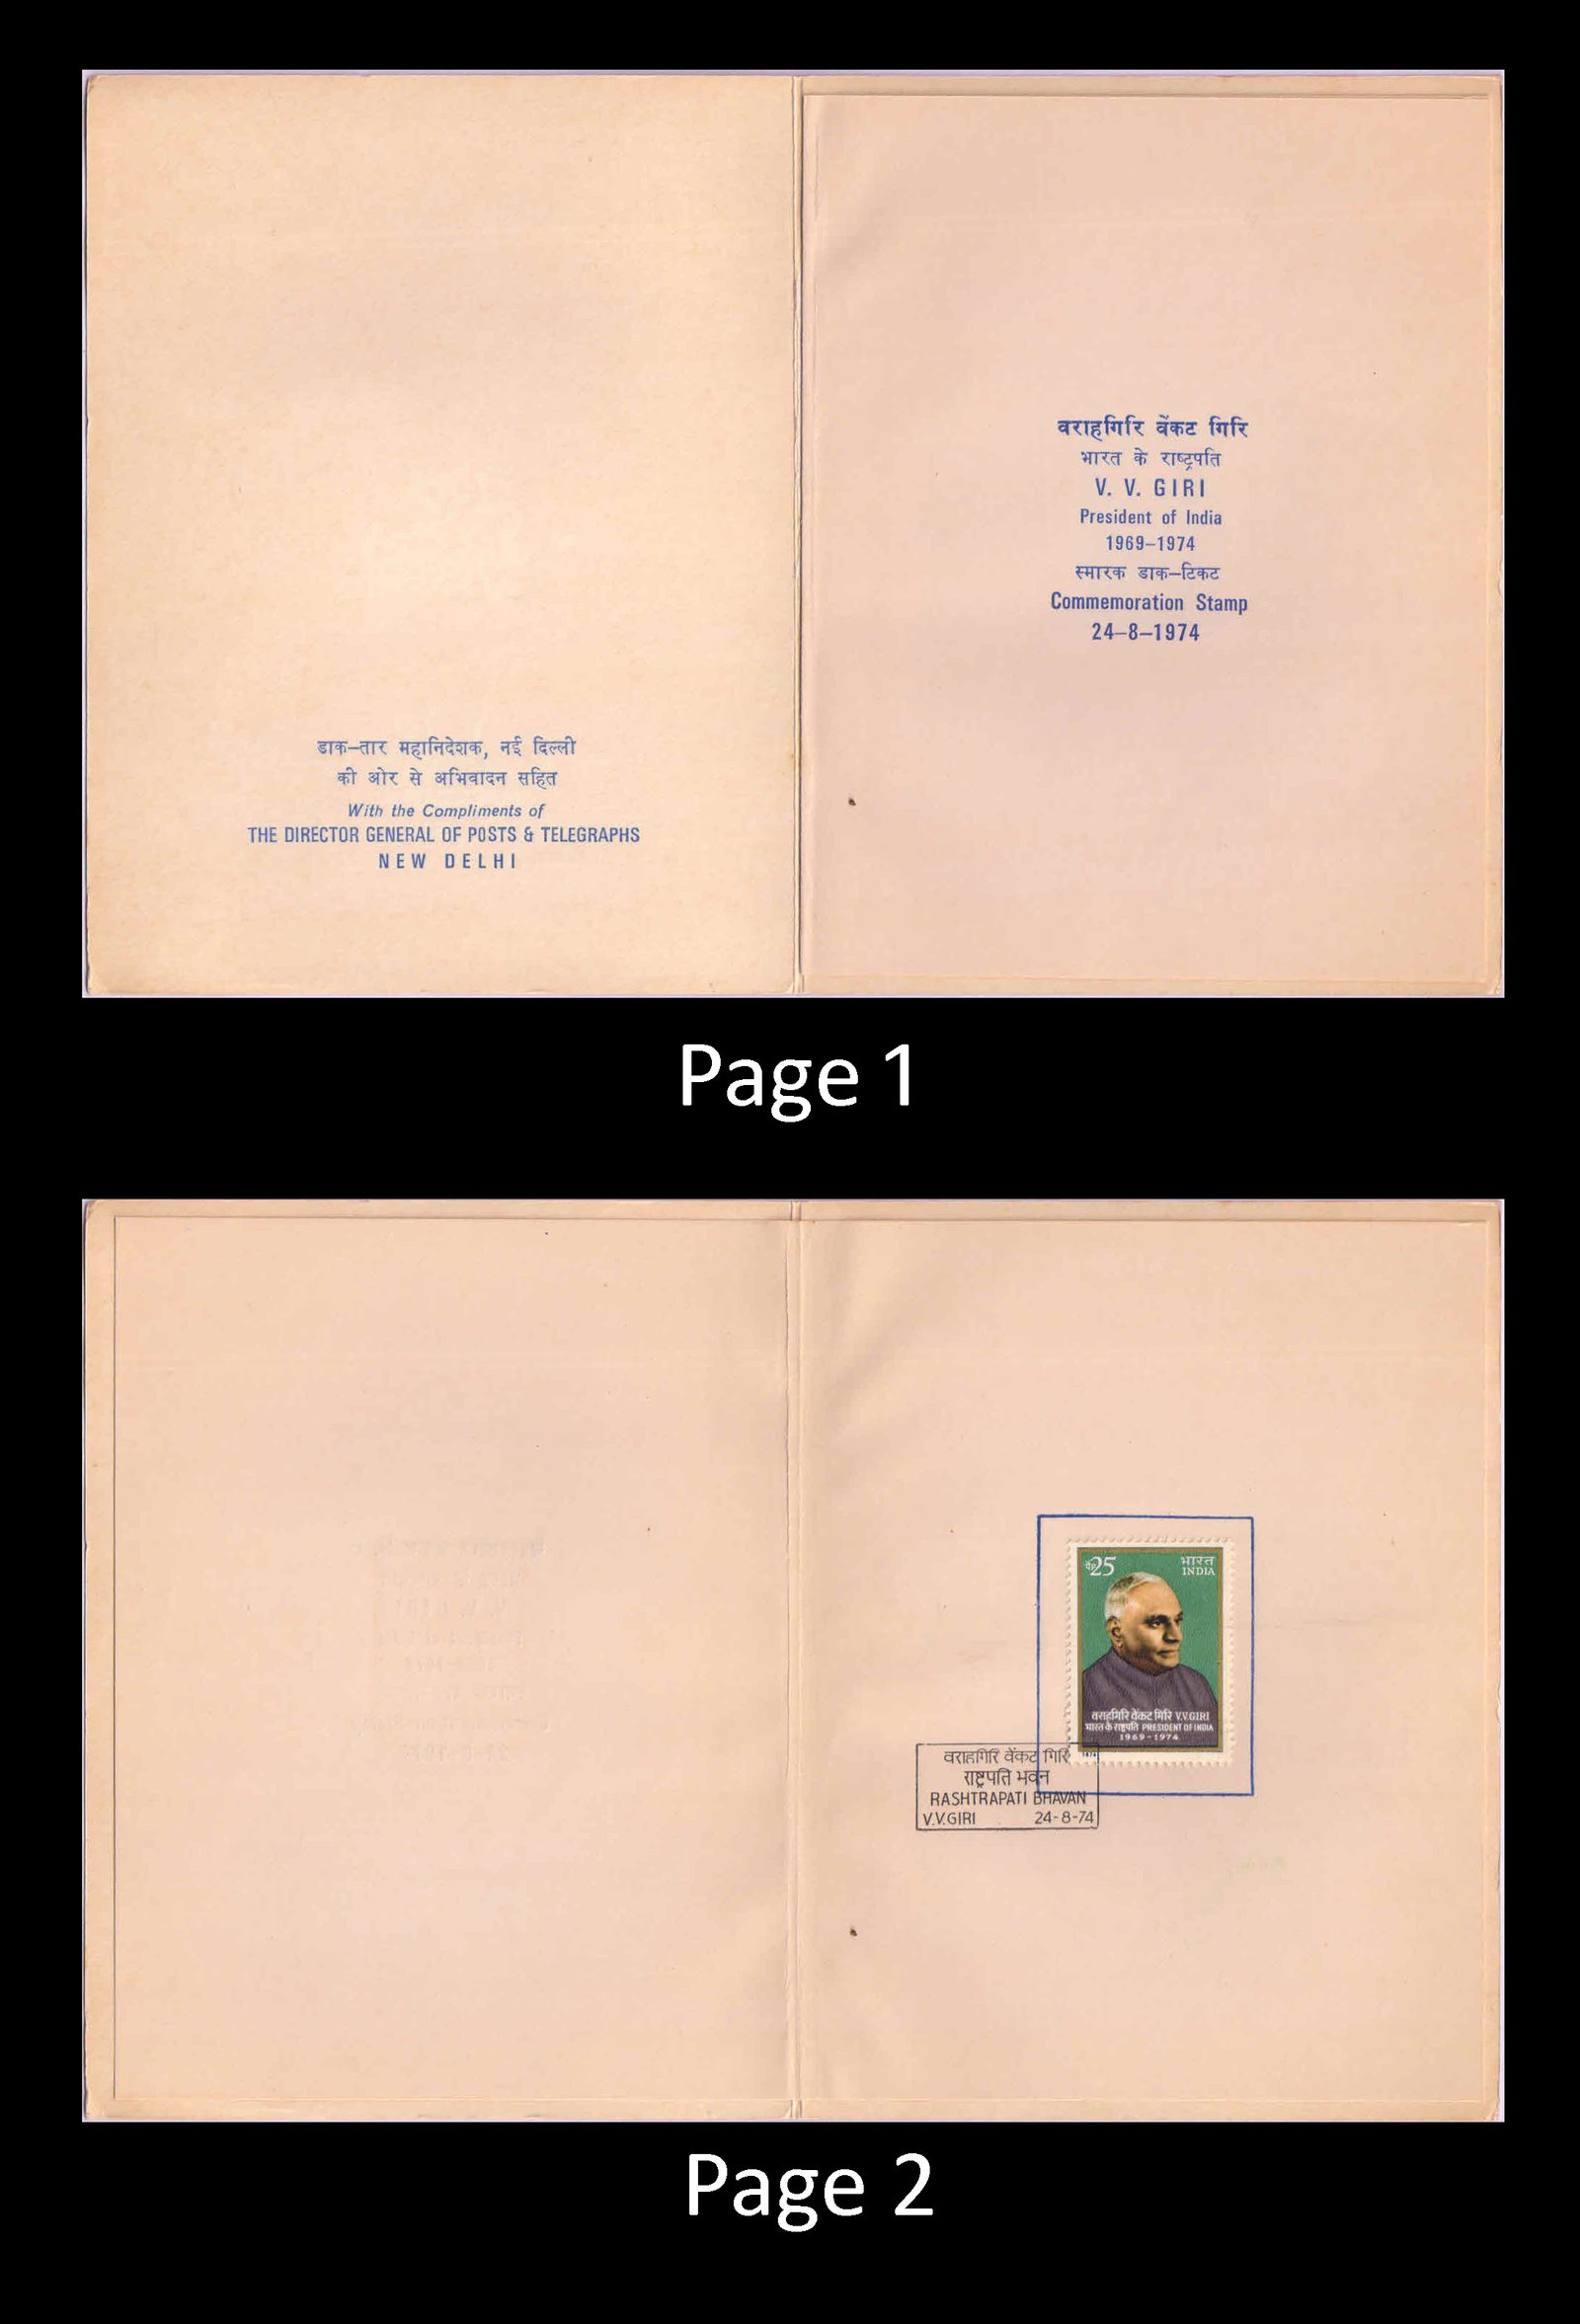 INDIA 1974 - V.V. Giri, President of India, VIP Folder